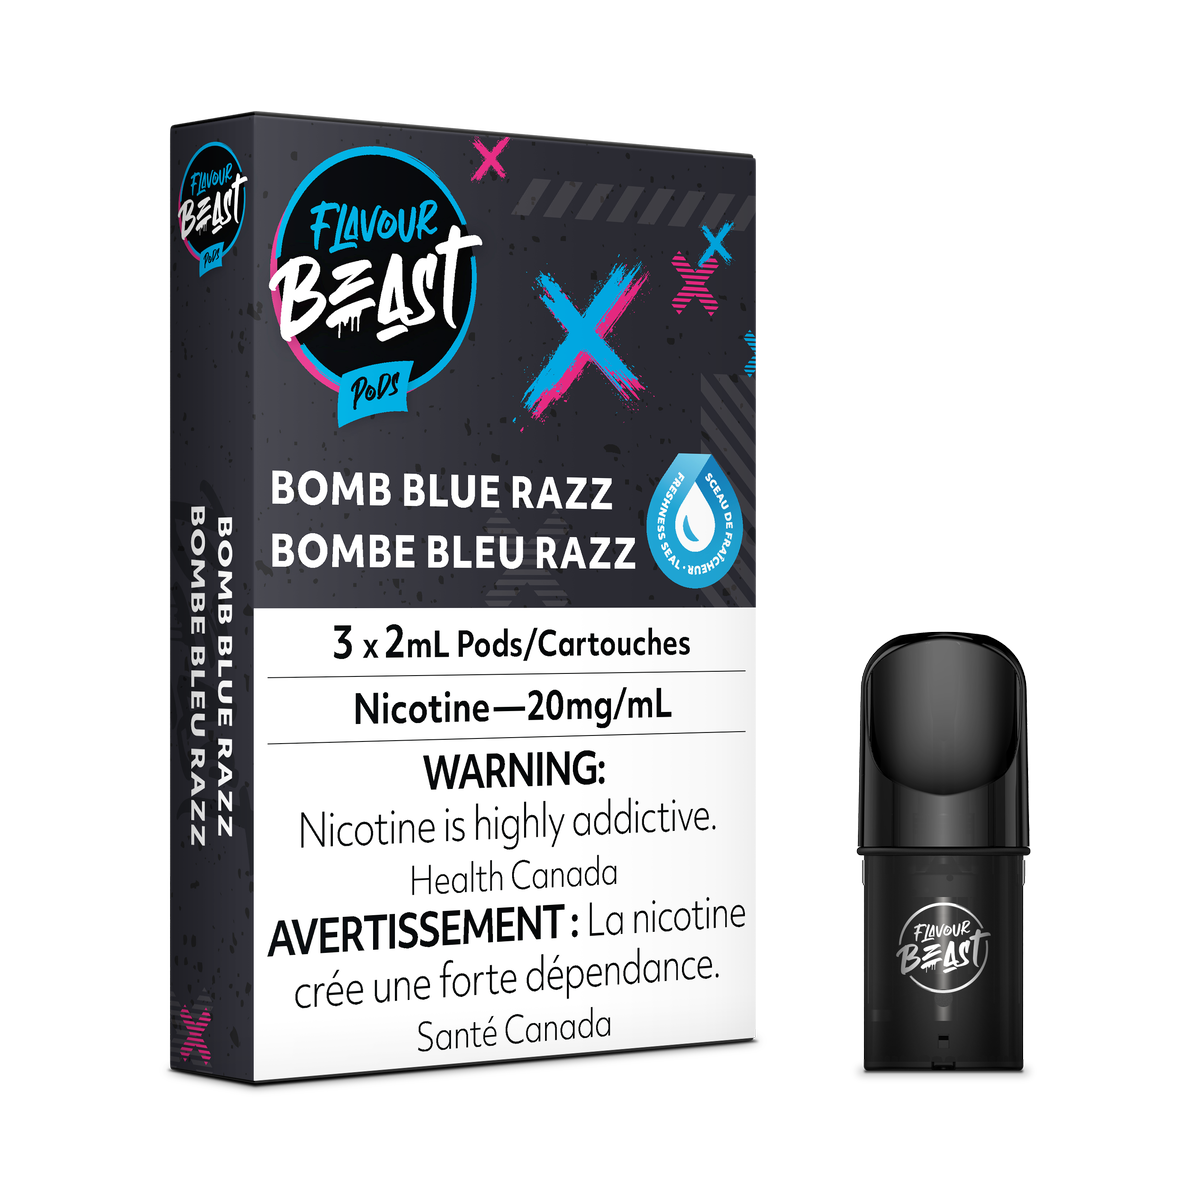 Flavour Beast - Bomb Blue Razz Pods